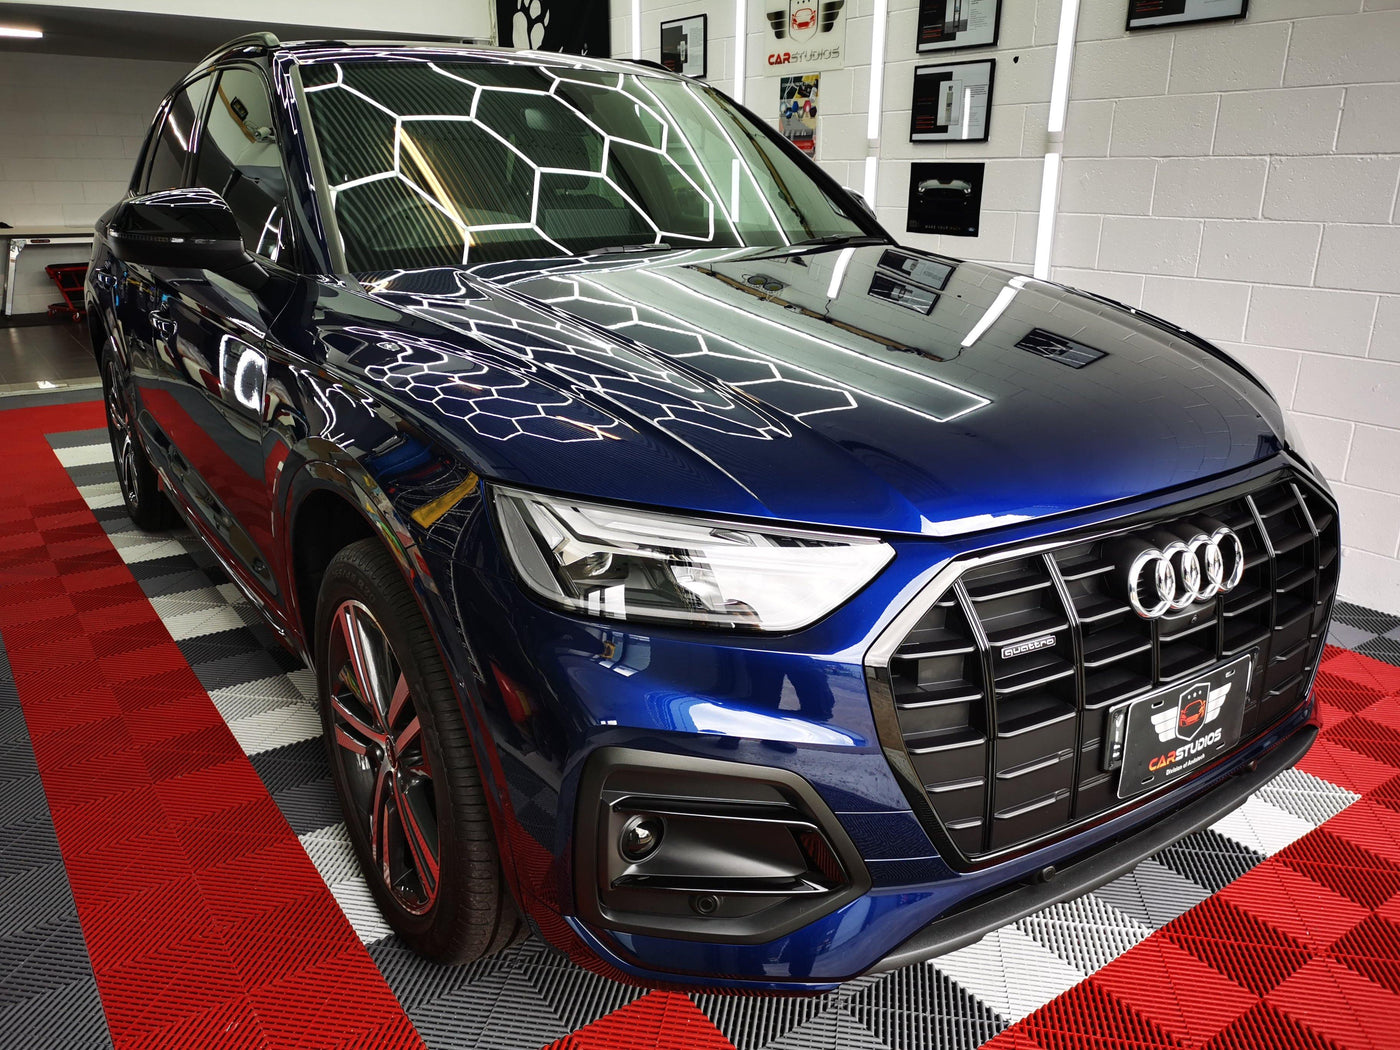 2021 Blue colour Audi Q5 - Car Studios